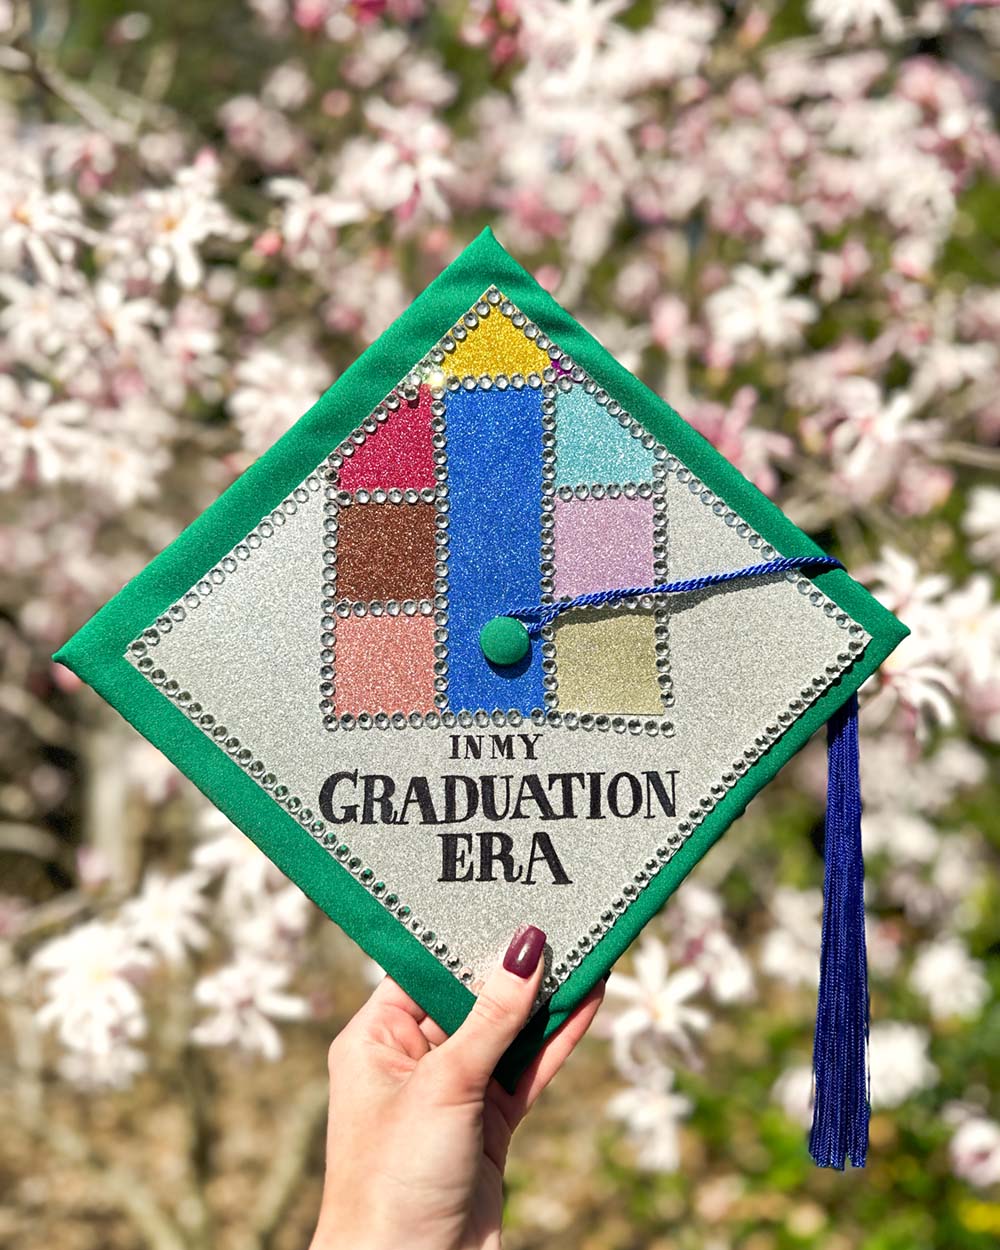 Eras-tour themed graduation cap with text in my graduation era